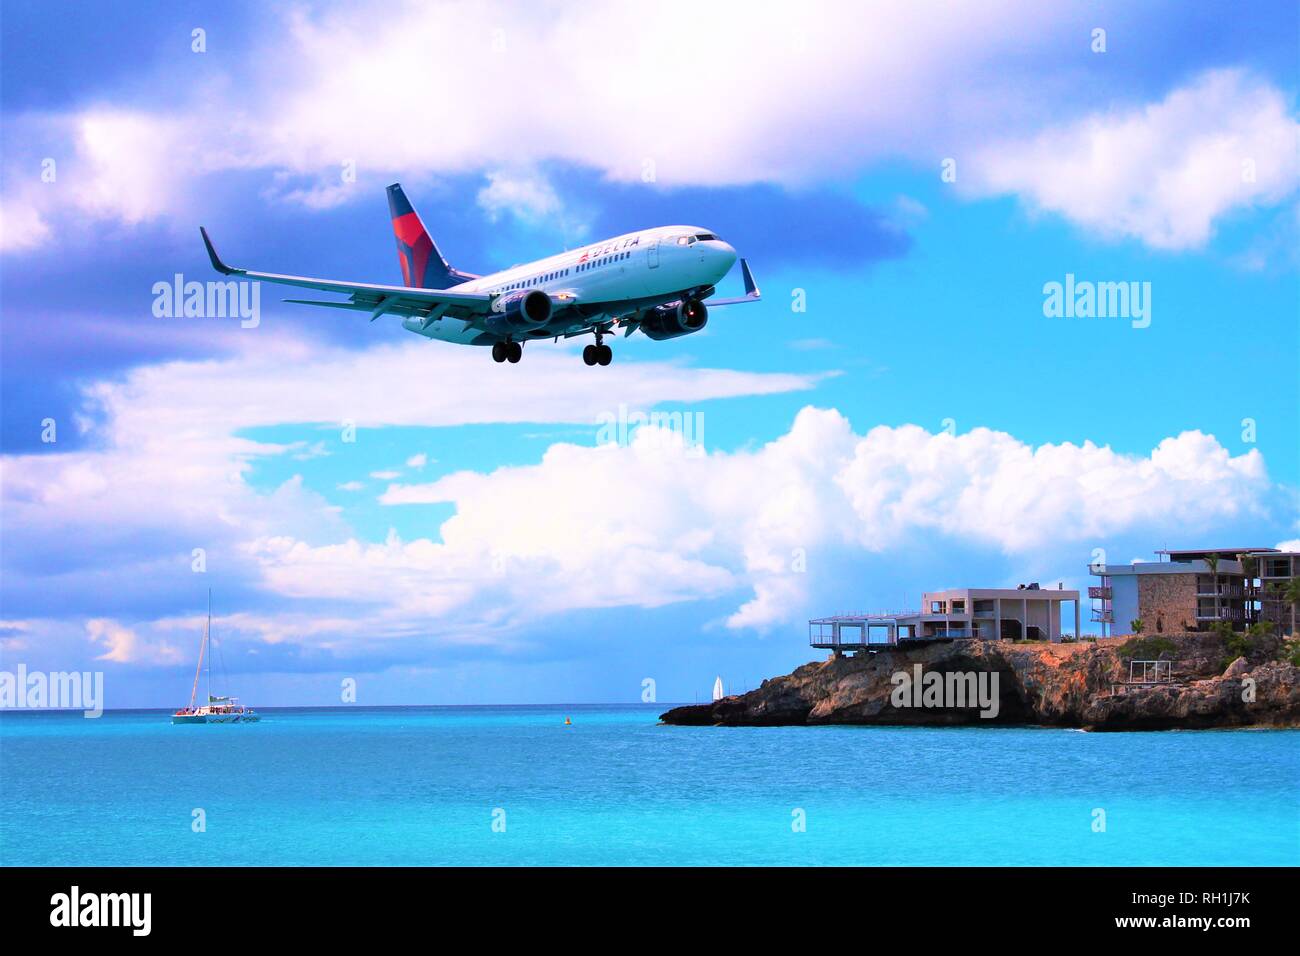 MAHO, ST MAARTEN, Karibik - 27. FEBRUAR 2018: ein Delta Air Lines Passagierflugzeug im Land an der SXM Princess Juliana International Airport kommen. Stockfoto